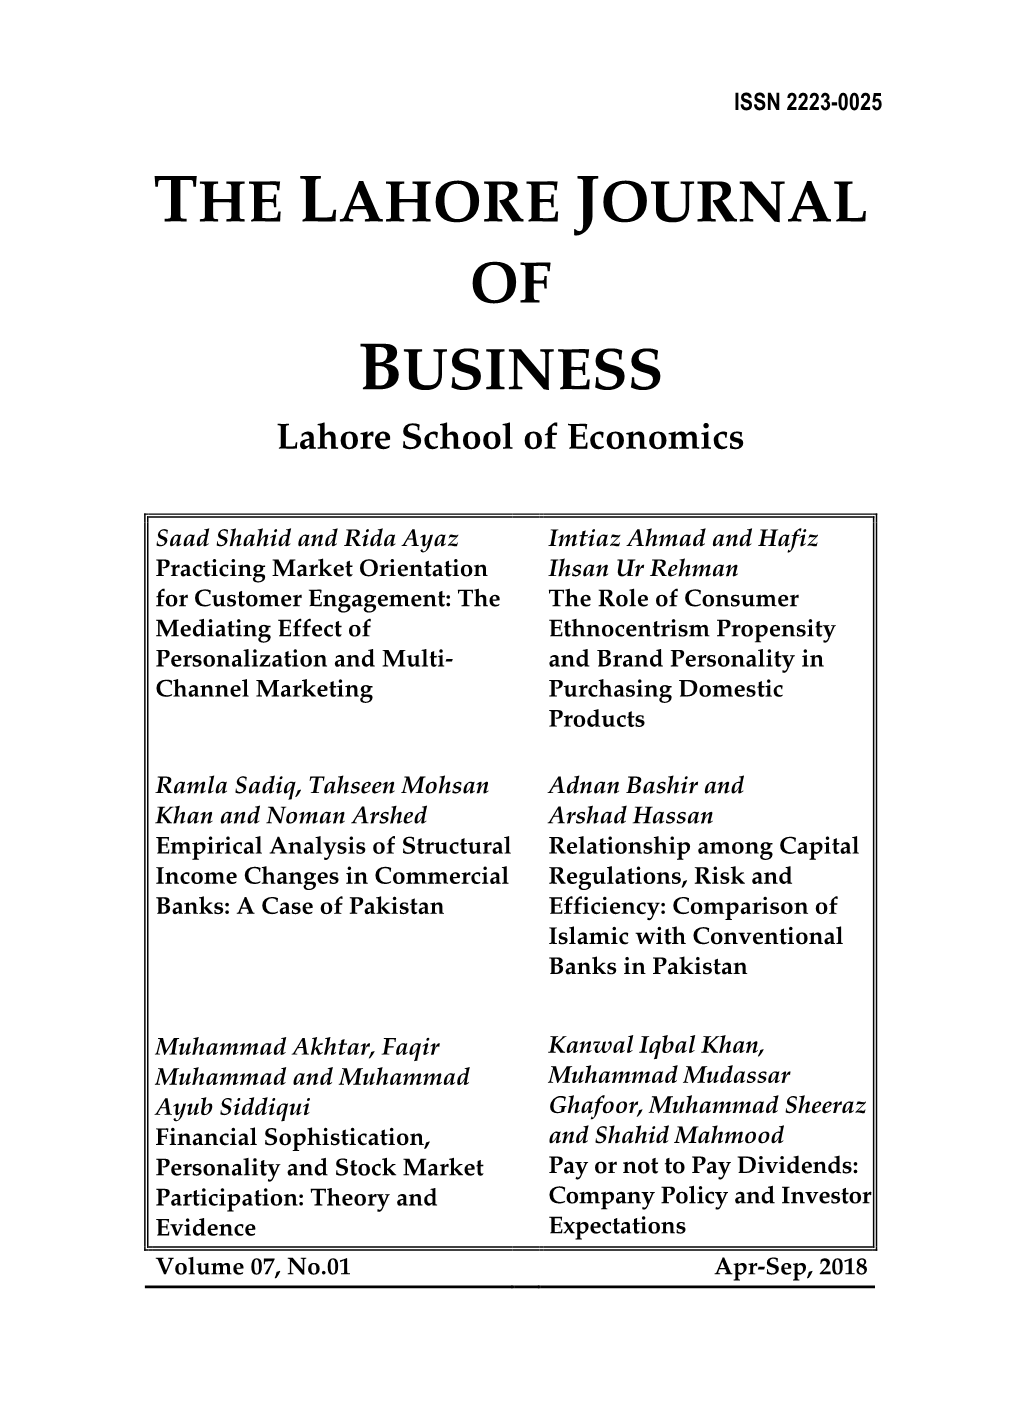 THE LAHORE JOURNAL of BUSINESS Lahore School of Economics